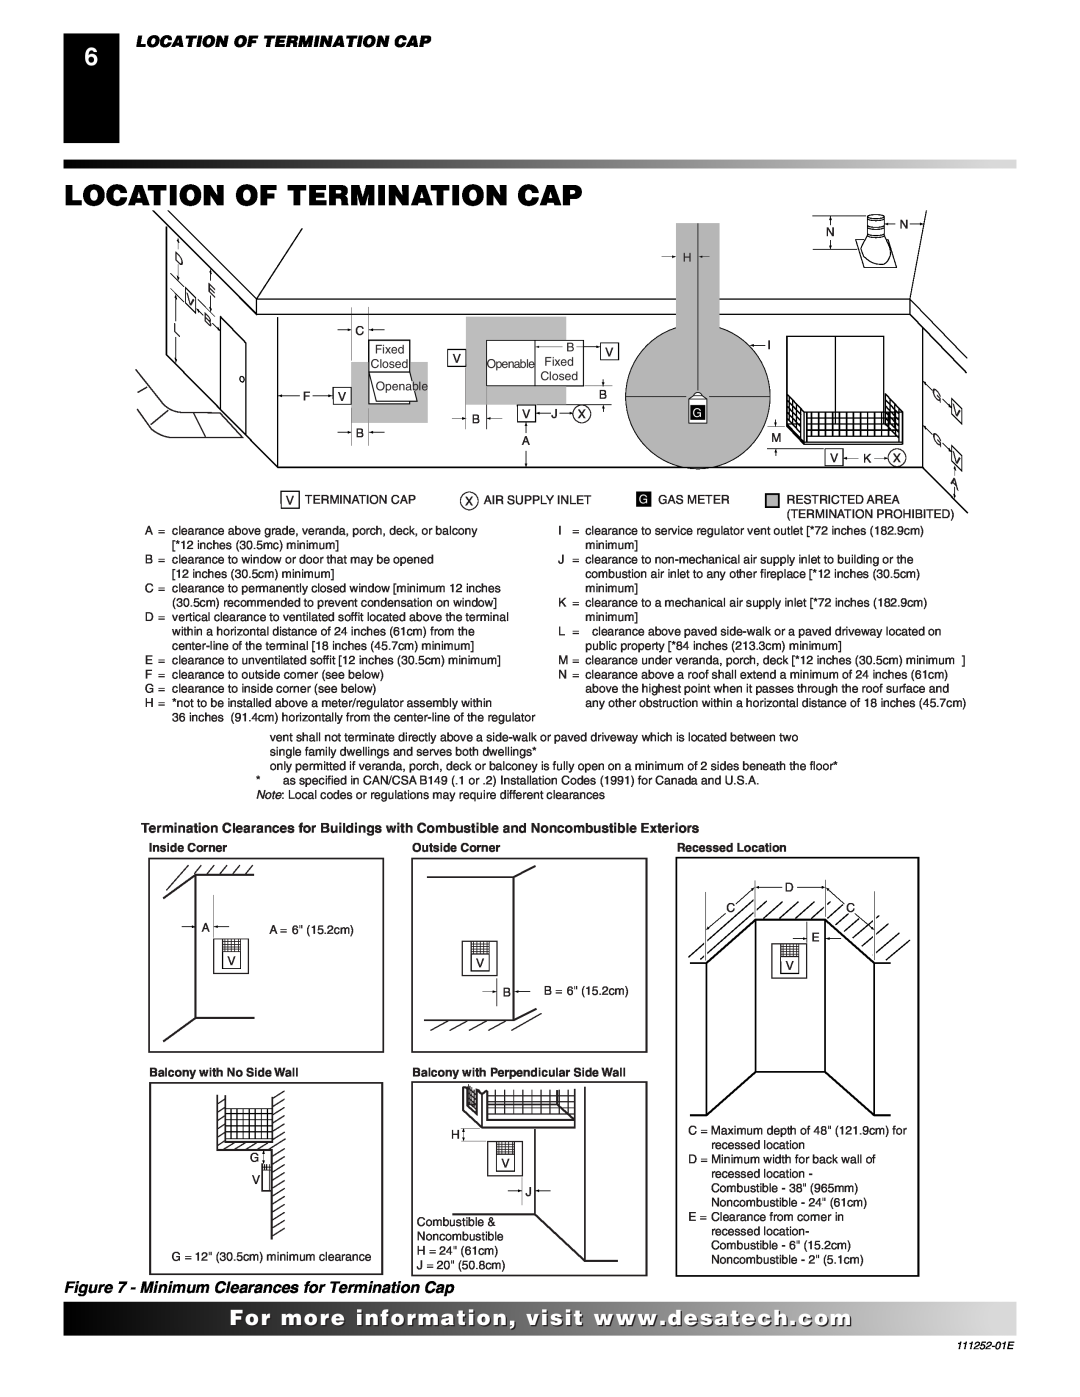 Desa CHDV36NR-C Location Of Termination Cap, D E B L, V G V A, Minimum Clearances for Termination Cap, Inside Corner 